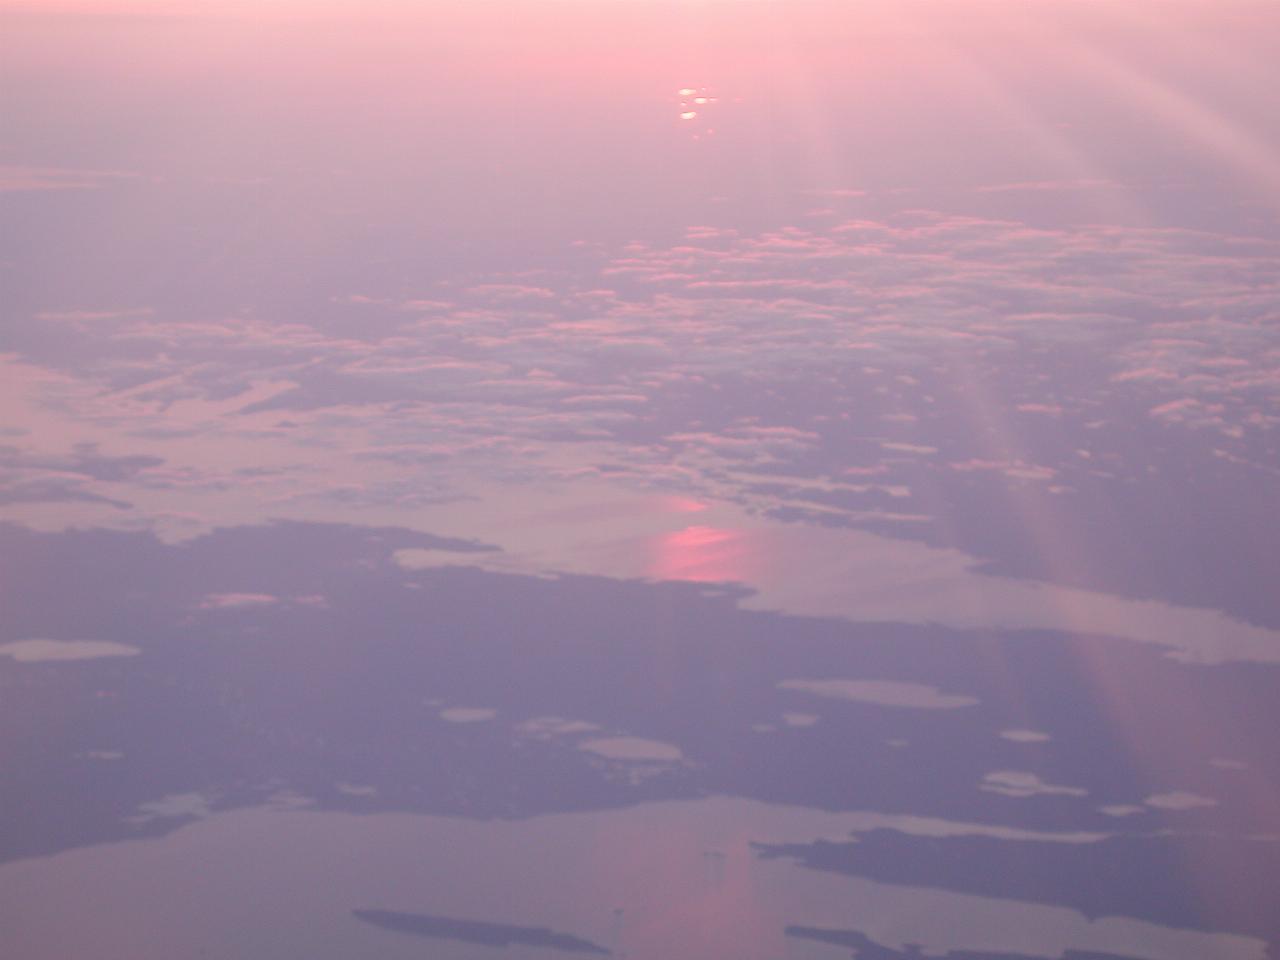 KPLU Viking Jazz: Sunset over northern Canada on way to Copenhagen